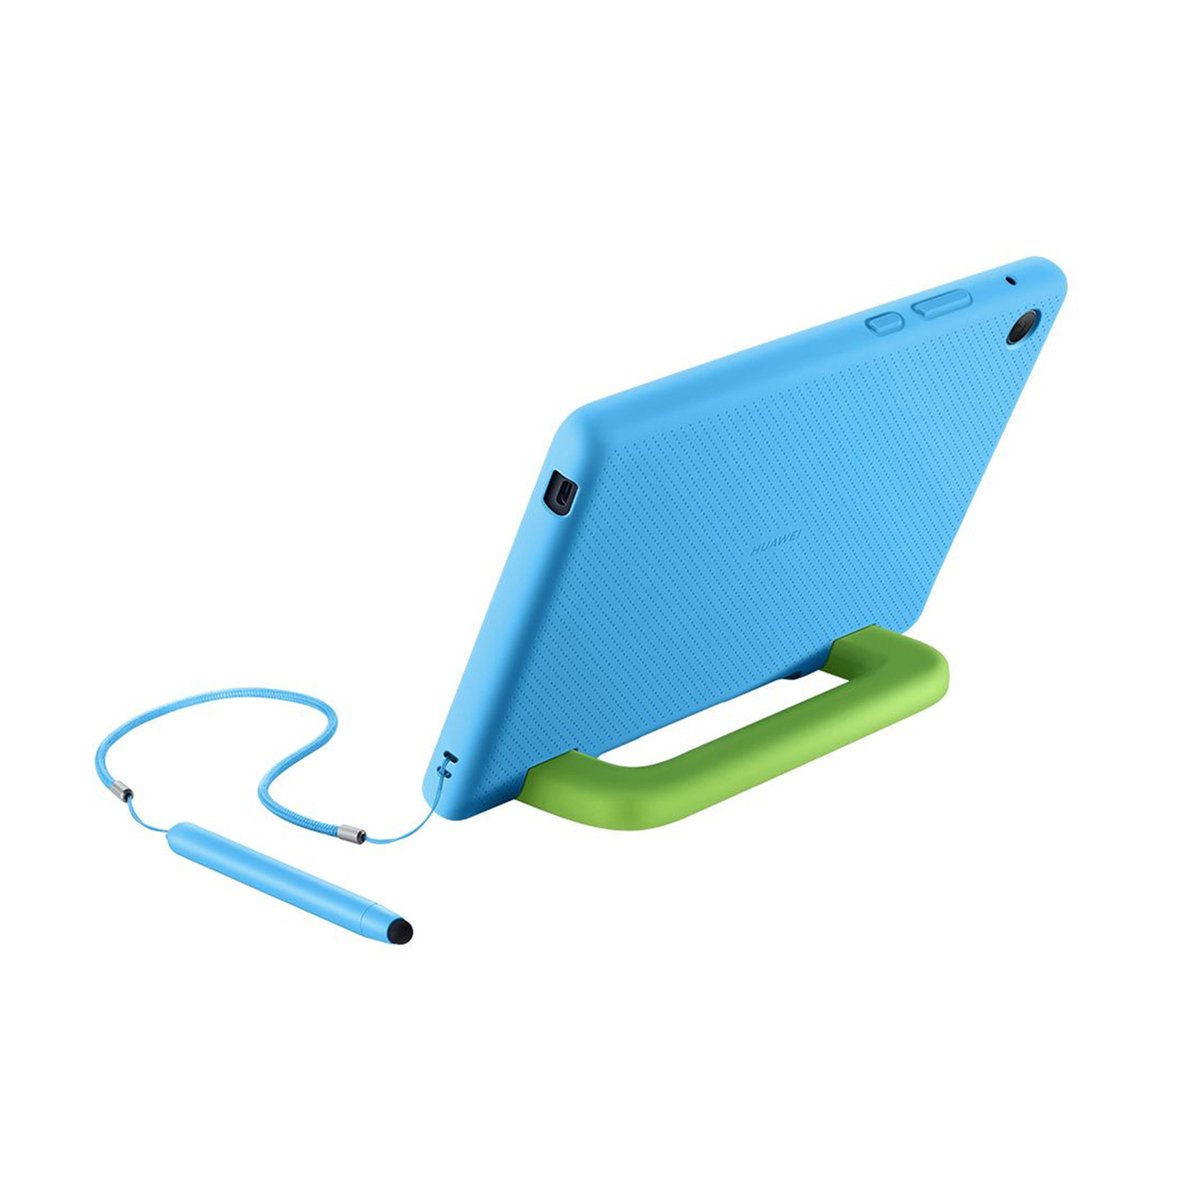 Huawei MatePad T8 8.0" 16GB 4G Kids Edition Blue